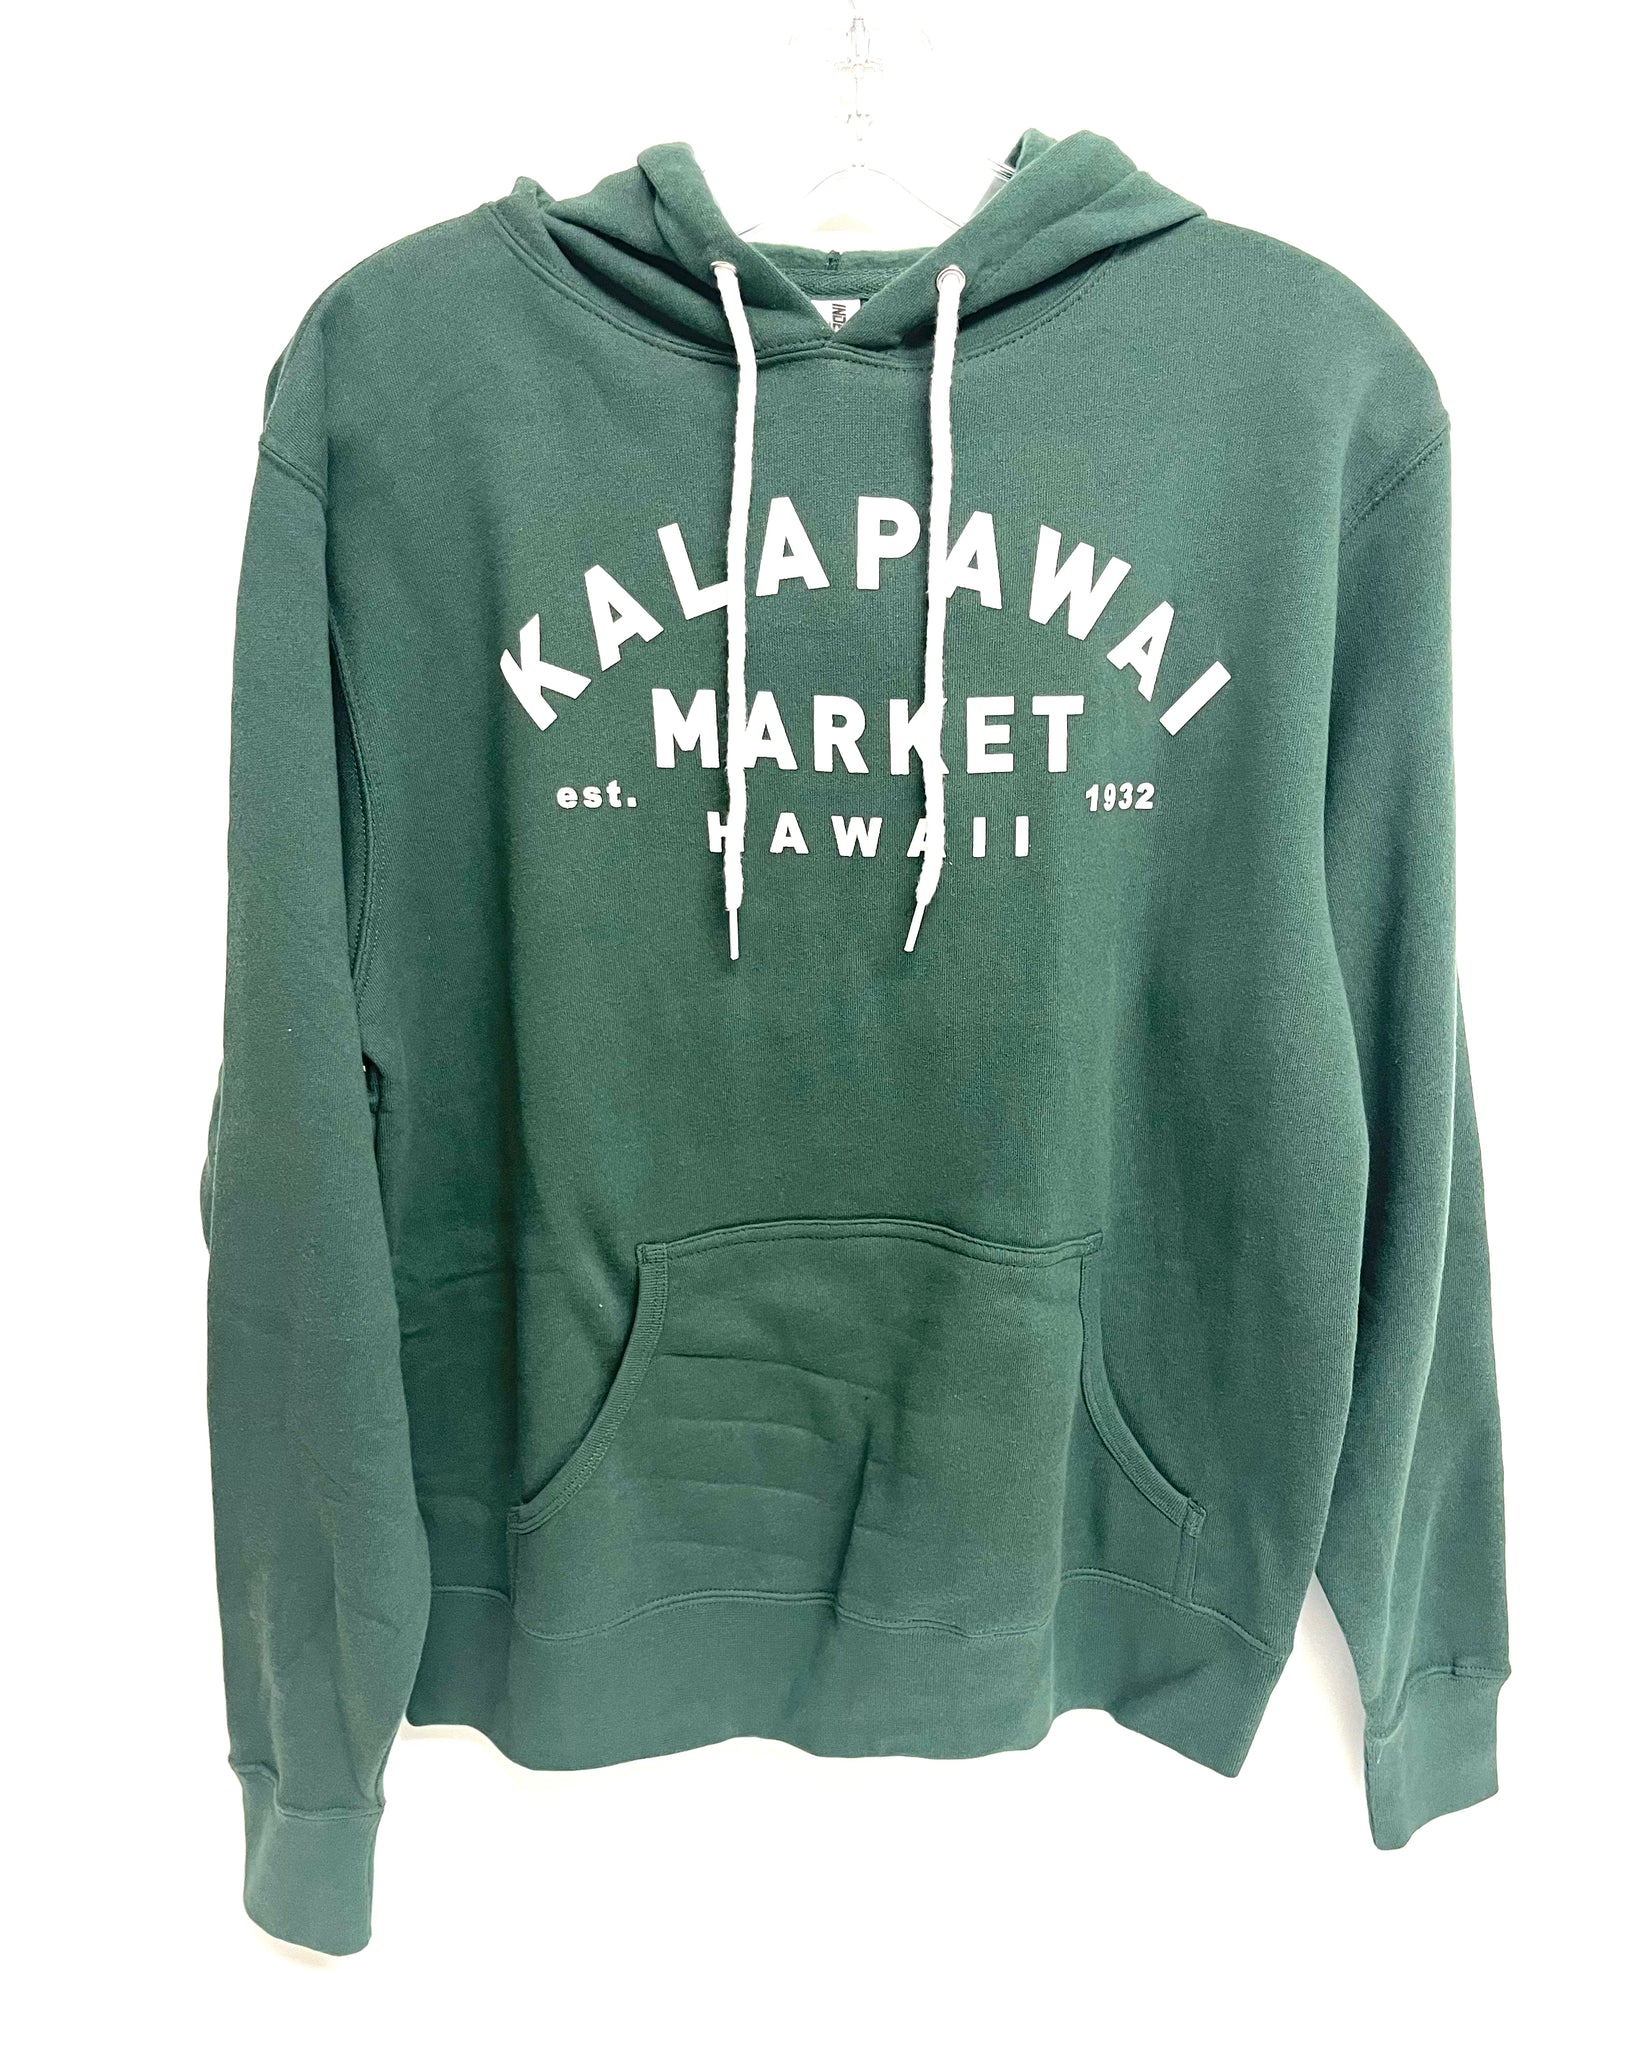 Kalapawai Market Hoodie